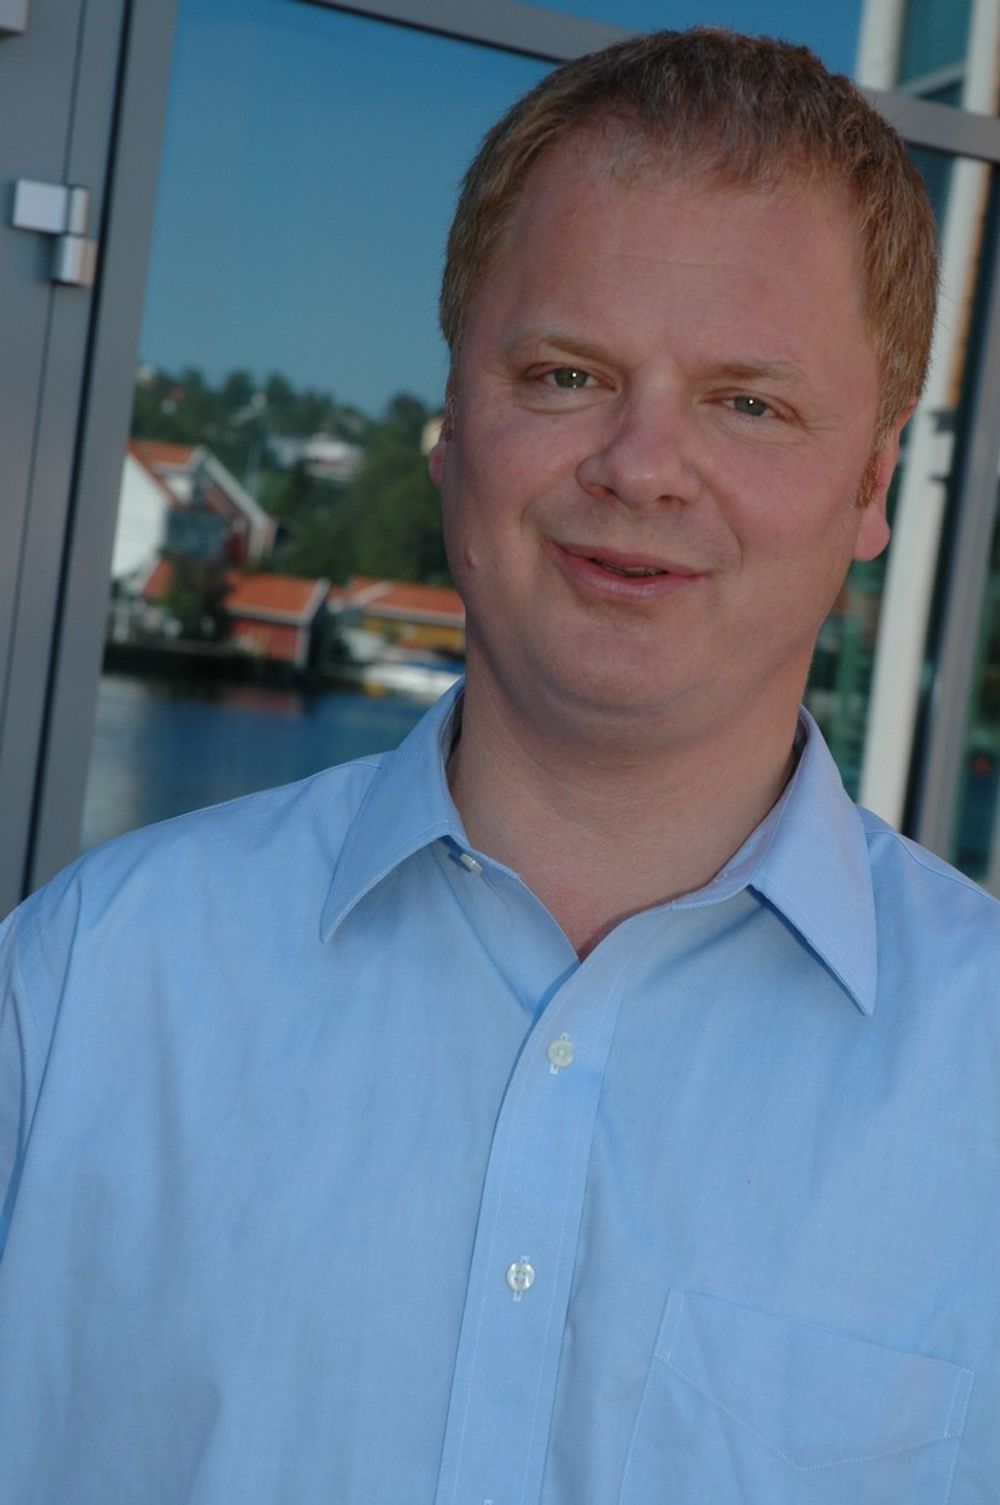 SJEFEN: Anders Holm er administrerende direktør i Nexus. Han kommer fra stillingen som teknisk direktør i APL.